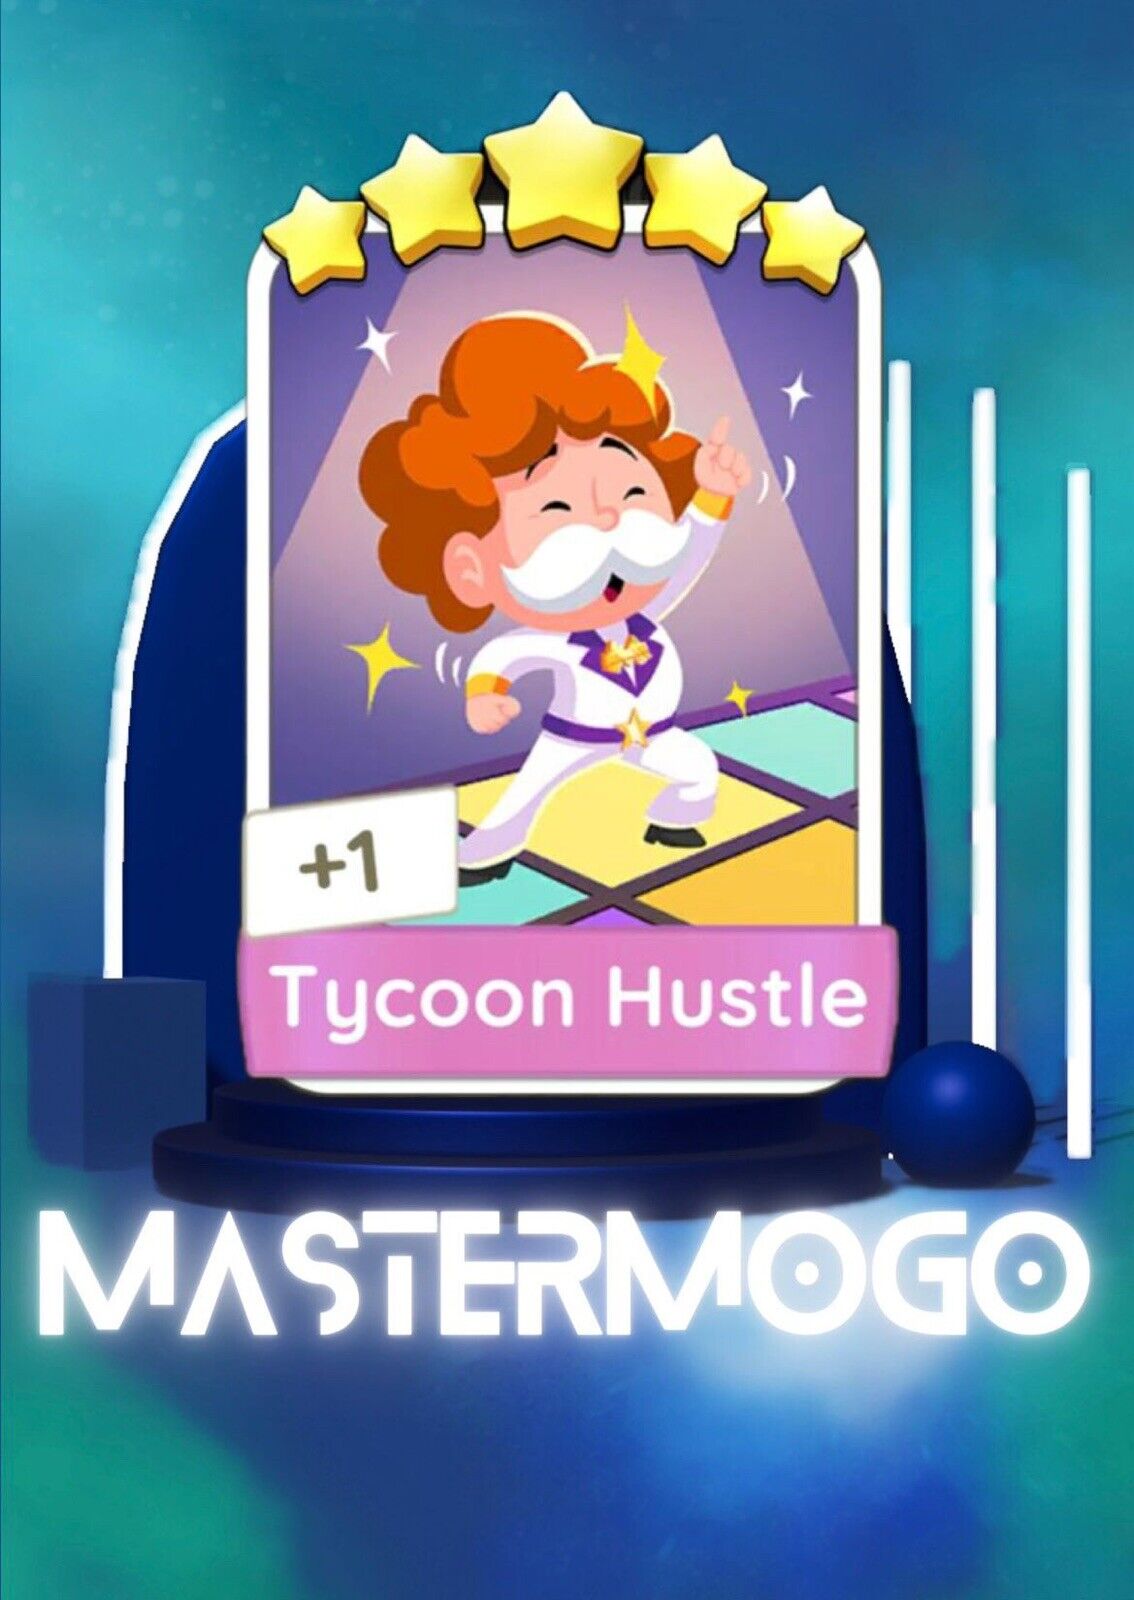 Monopoly Go- Tycoon Hustle 5 ⭐- set #18 Sticker